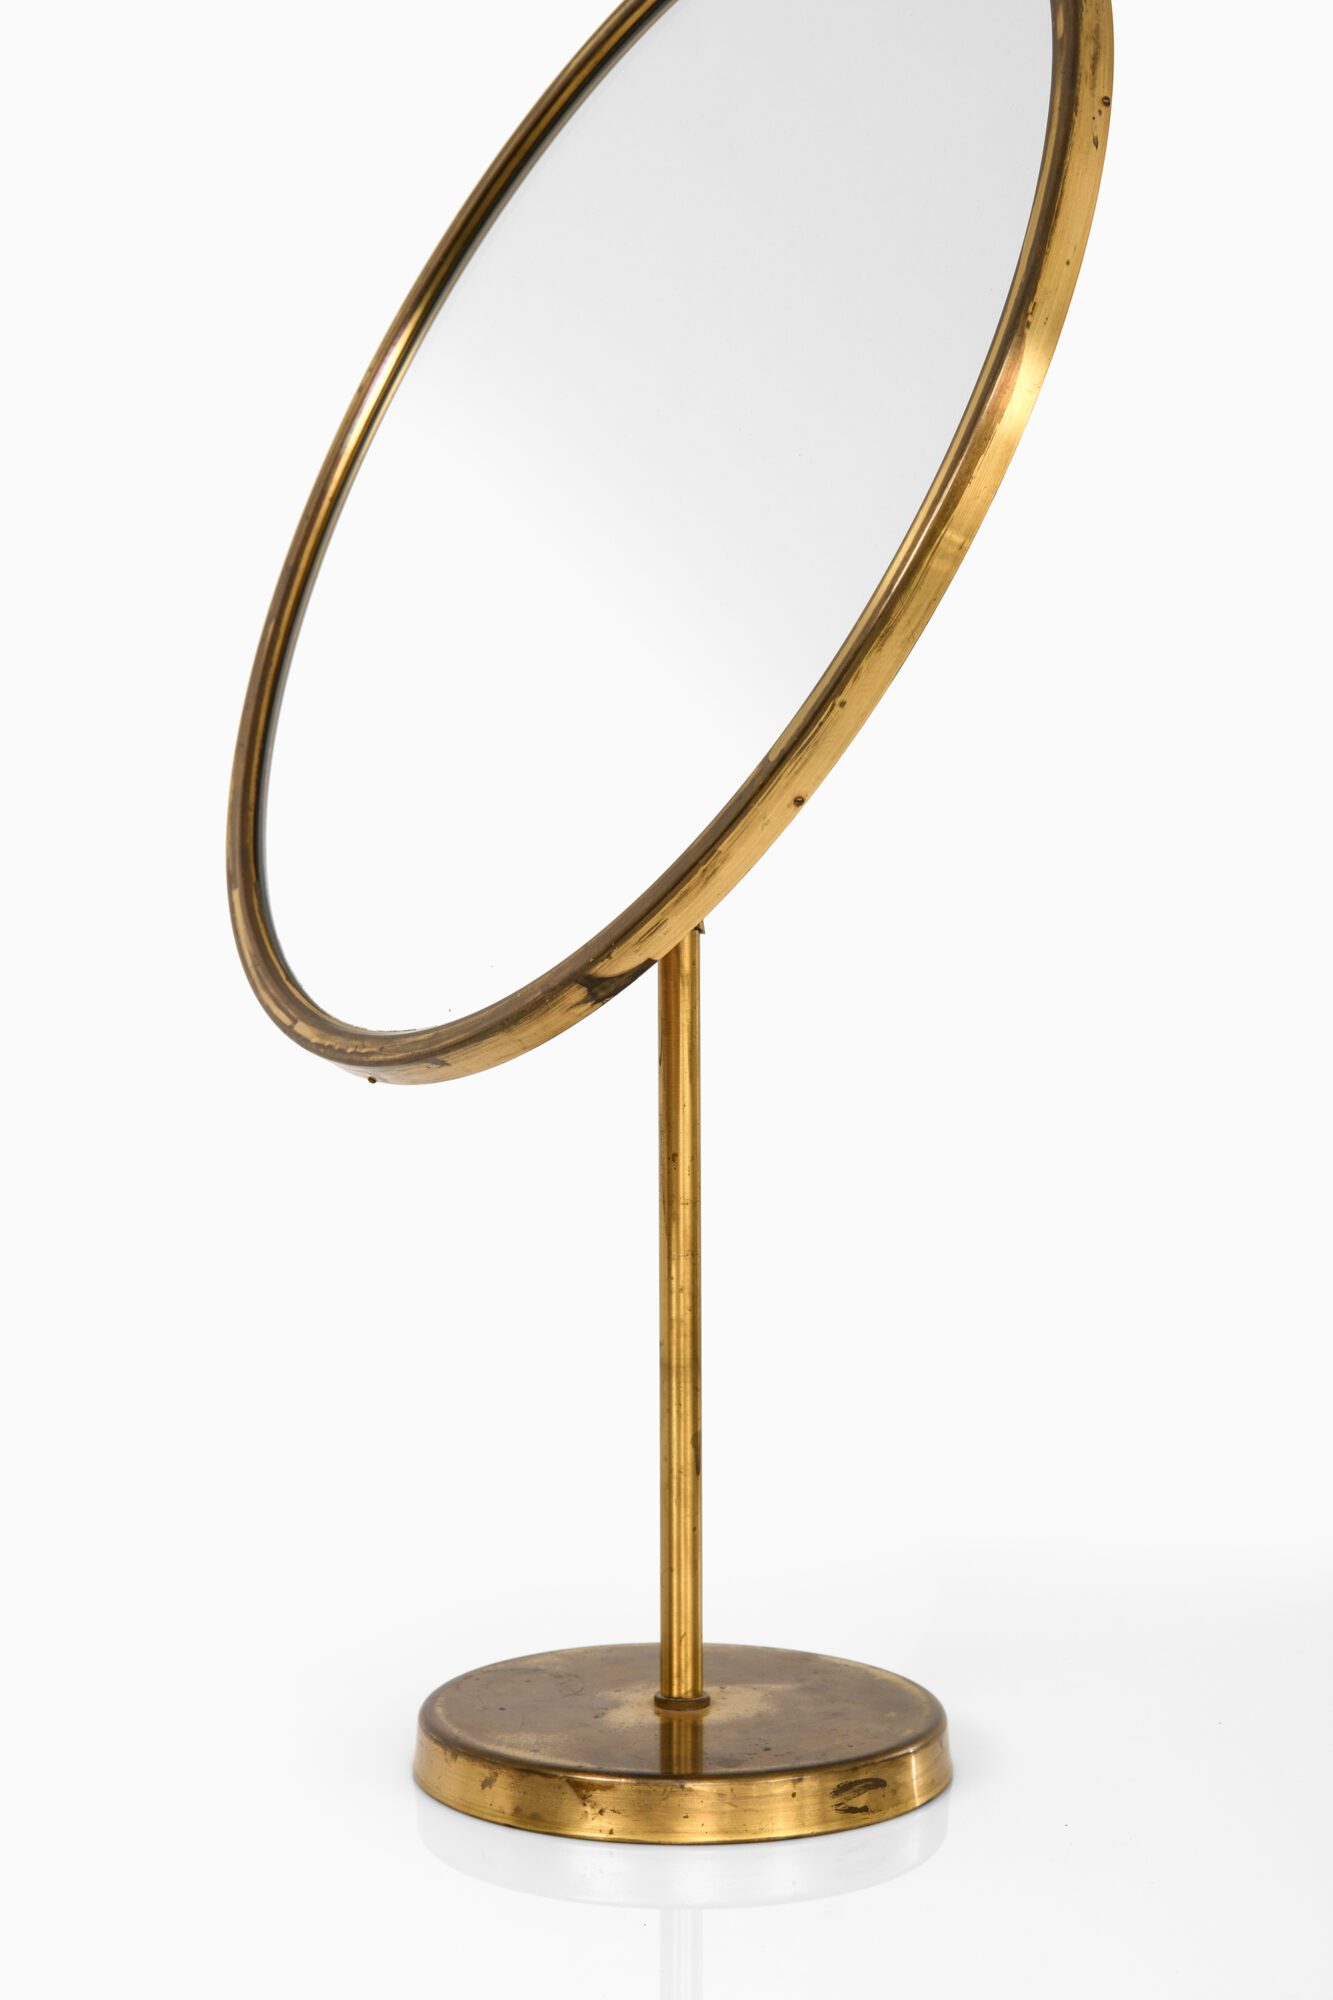 Josef Frank table mirror in brass and teak at Studio Schalling